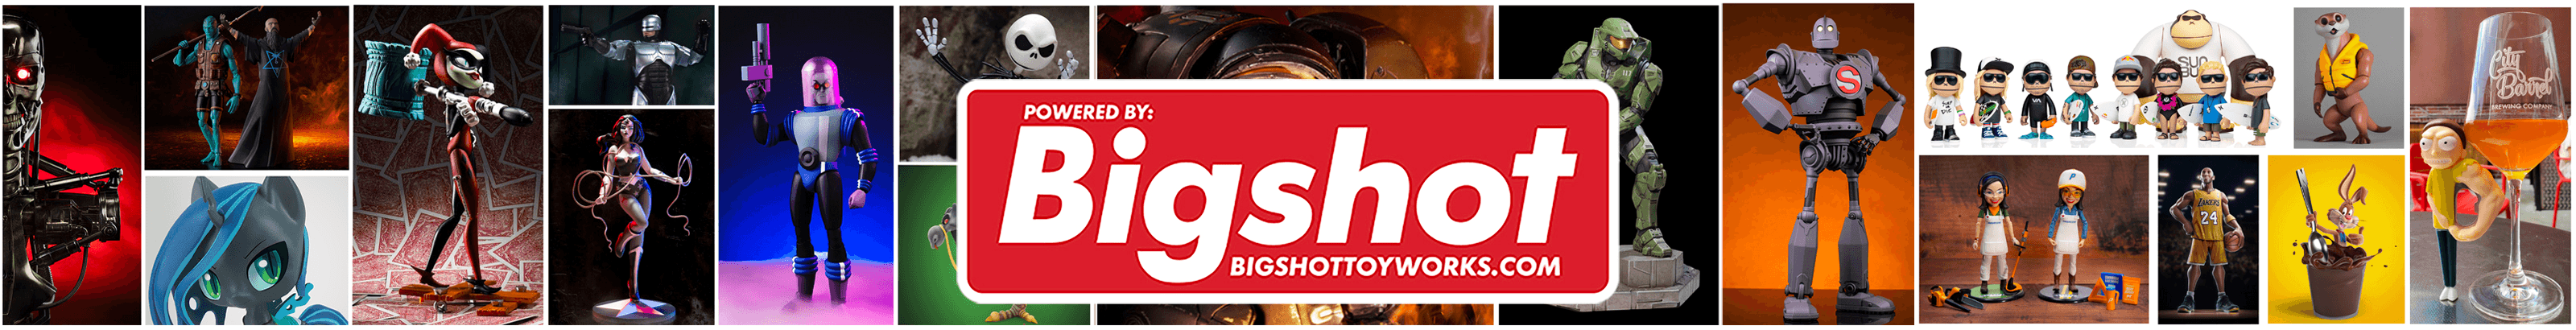 BigshotToyworks bannière